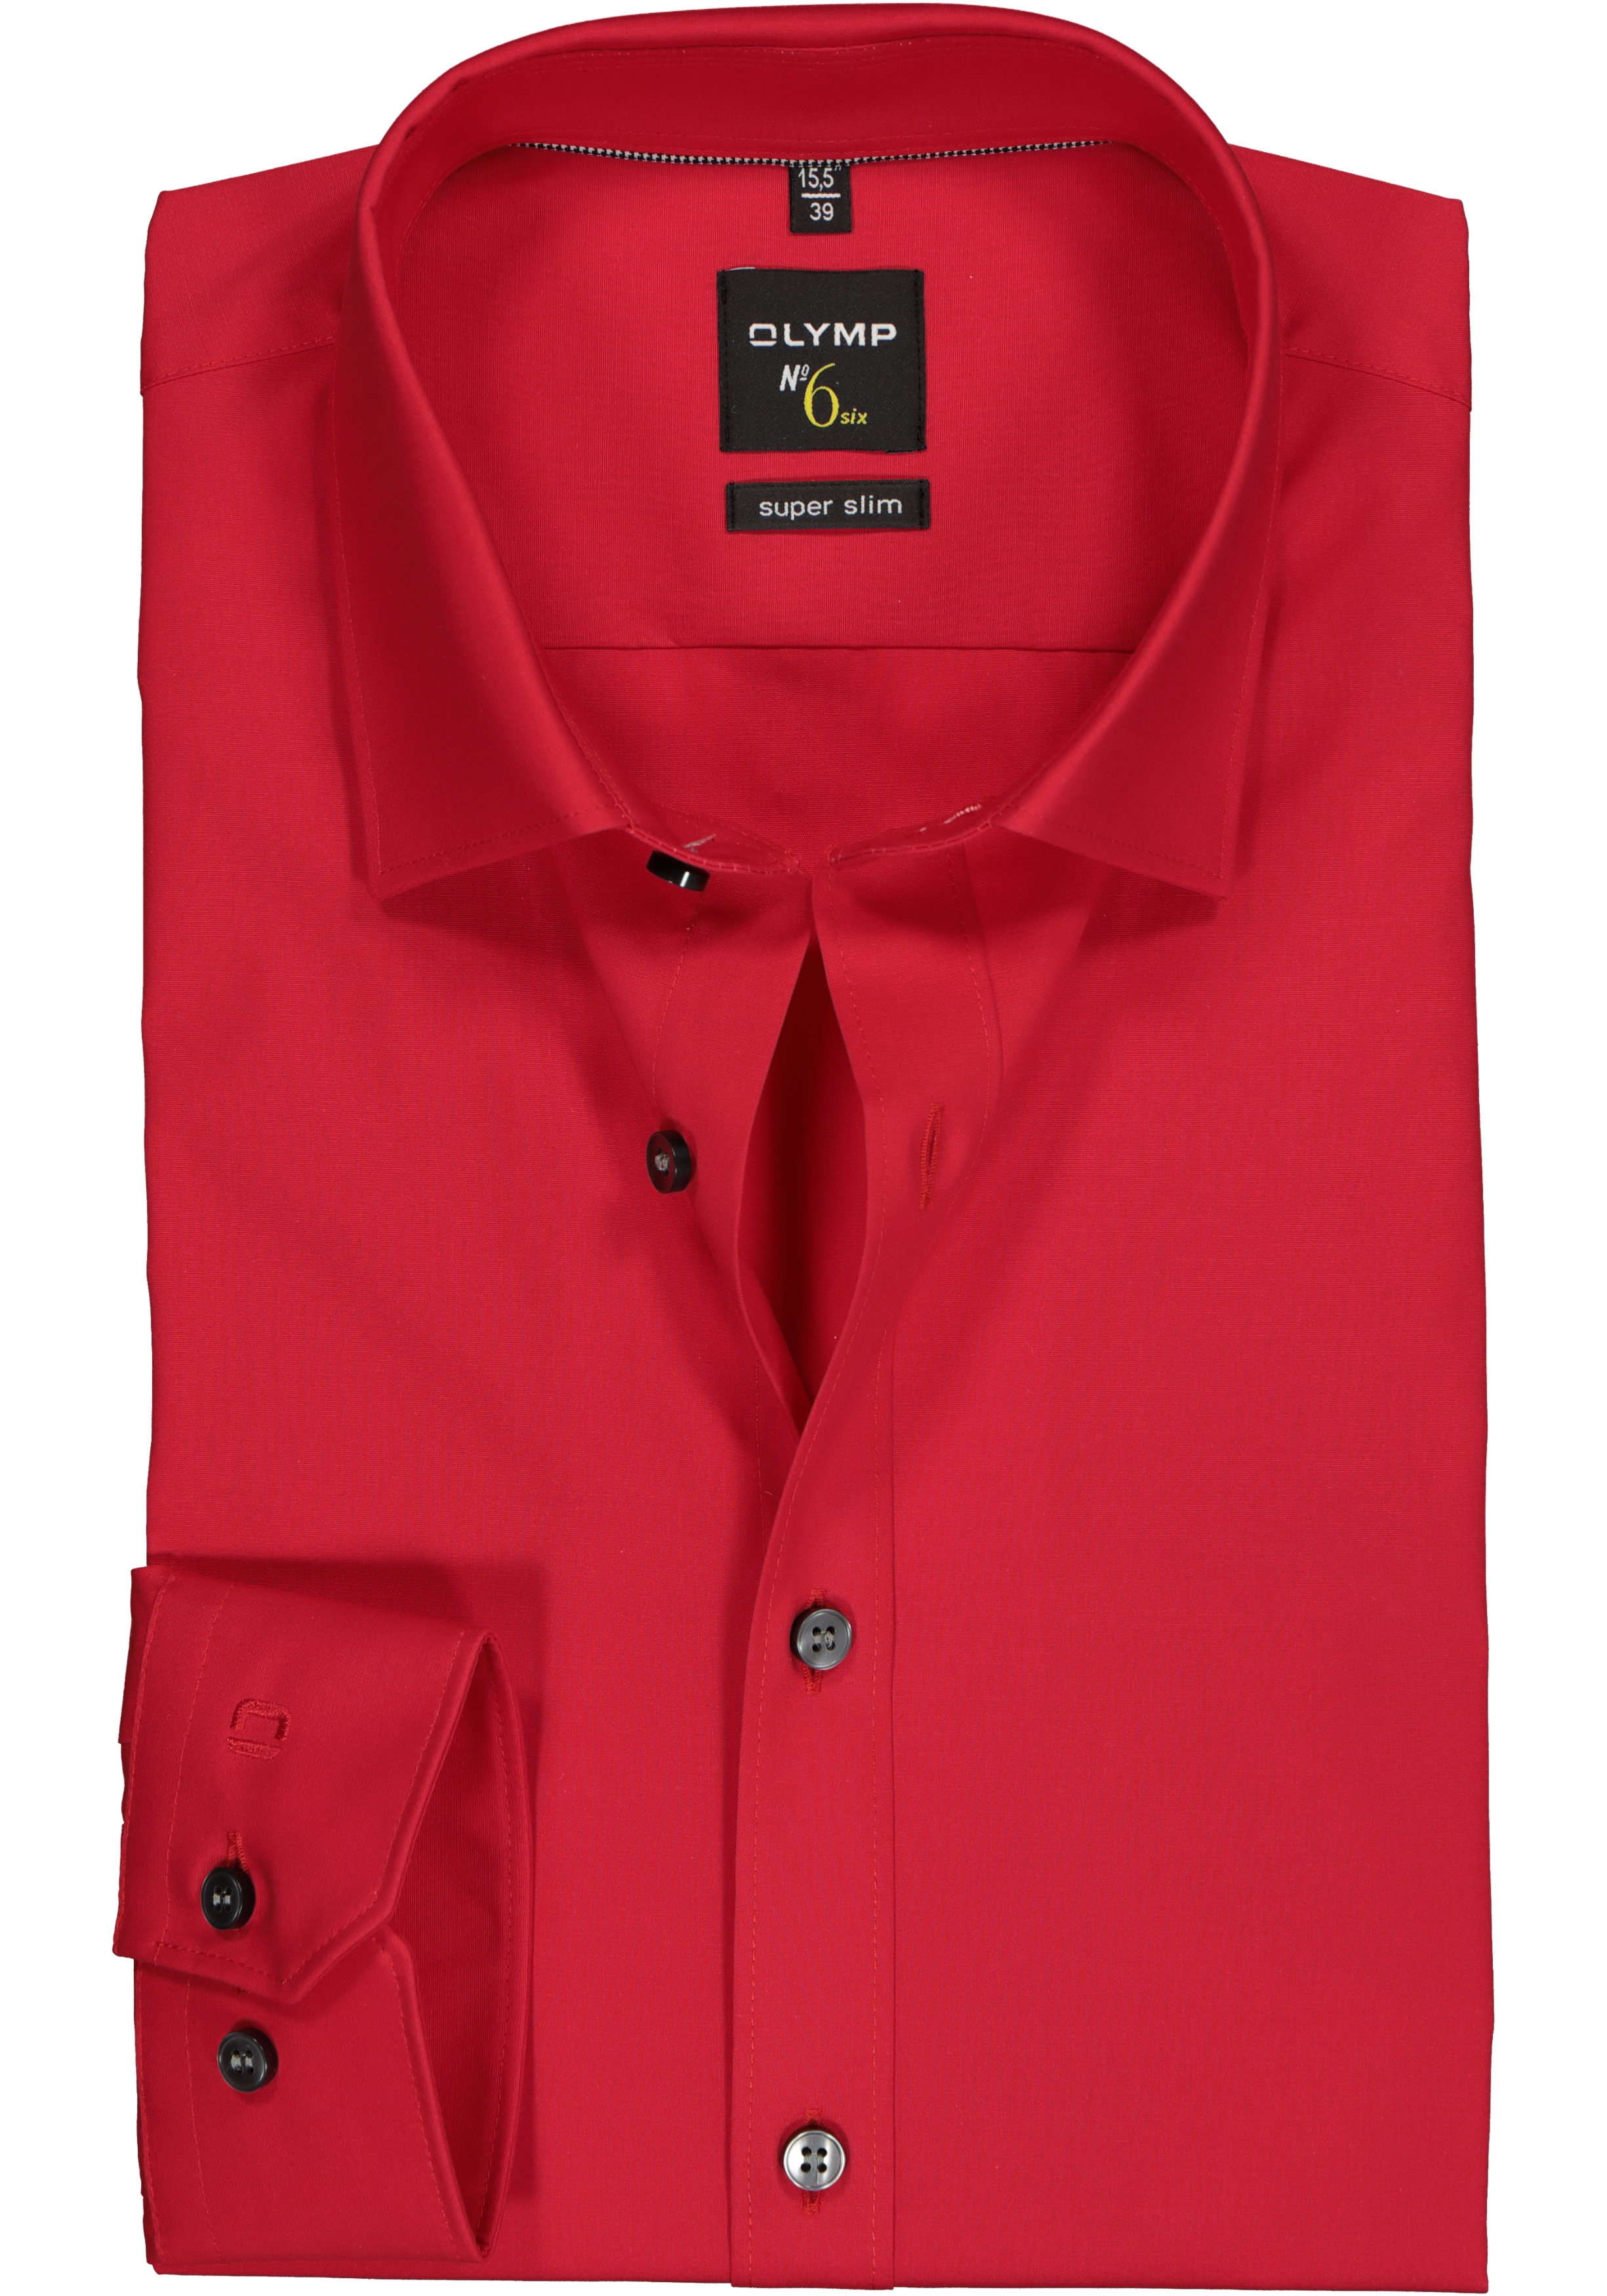 OLYMP No. Six super slim fit overhemd, rood